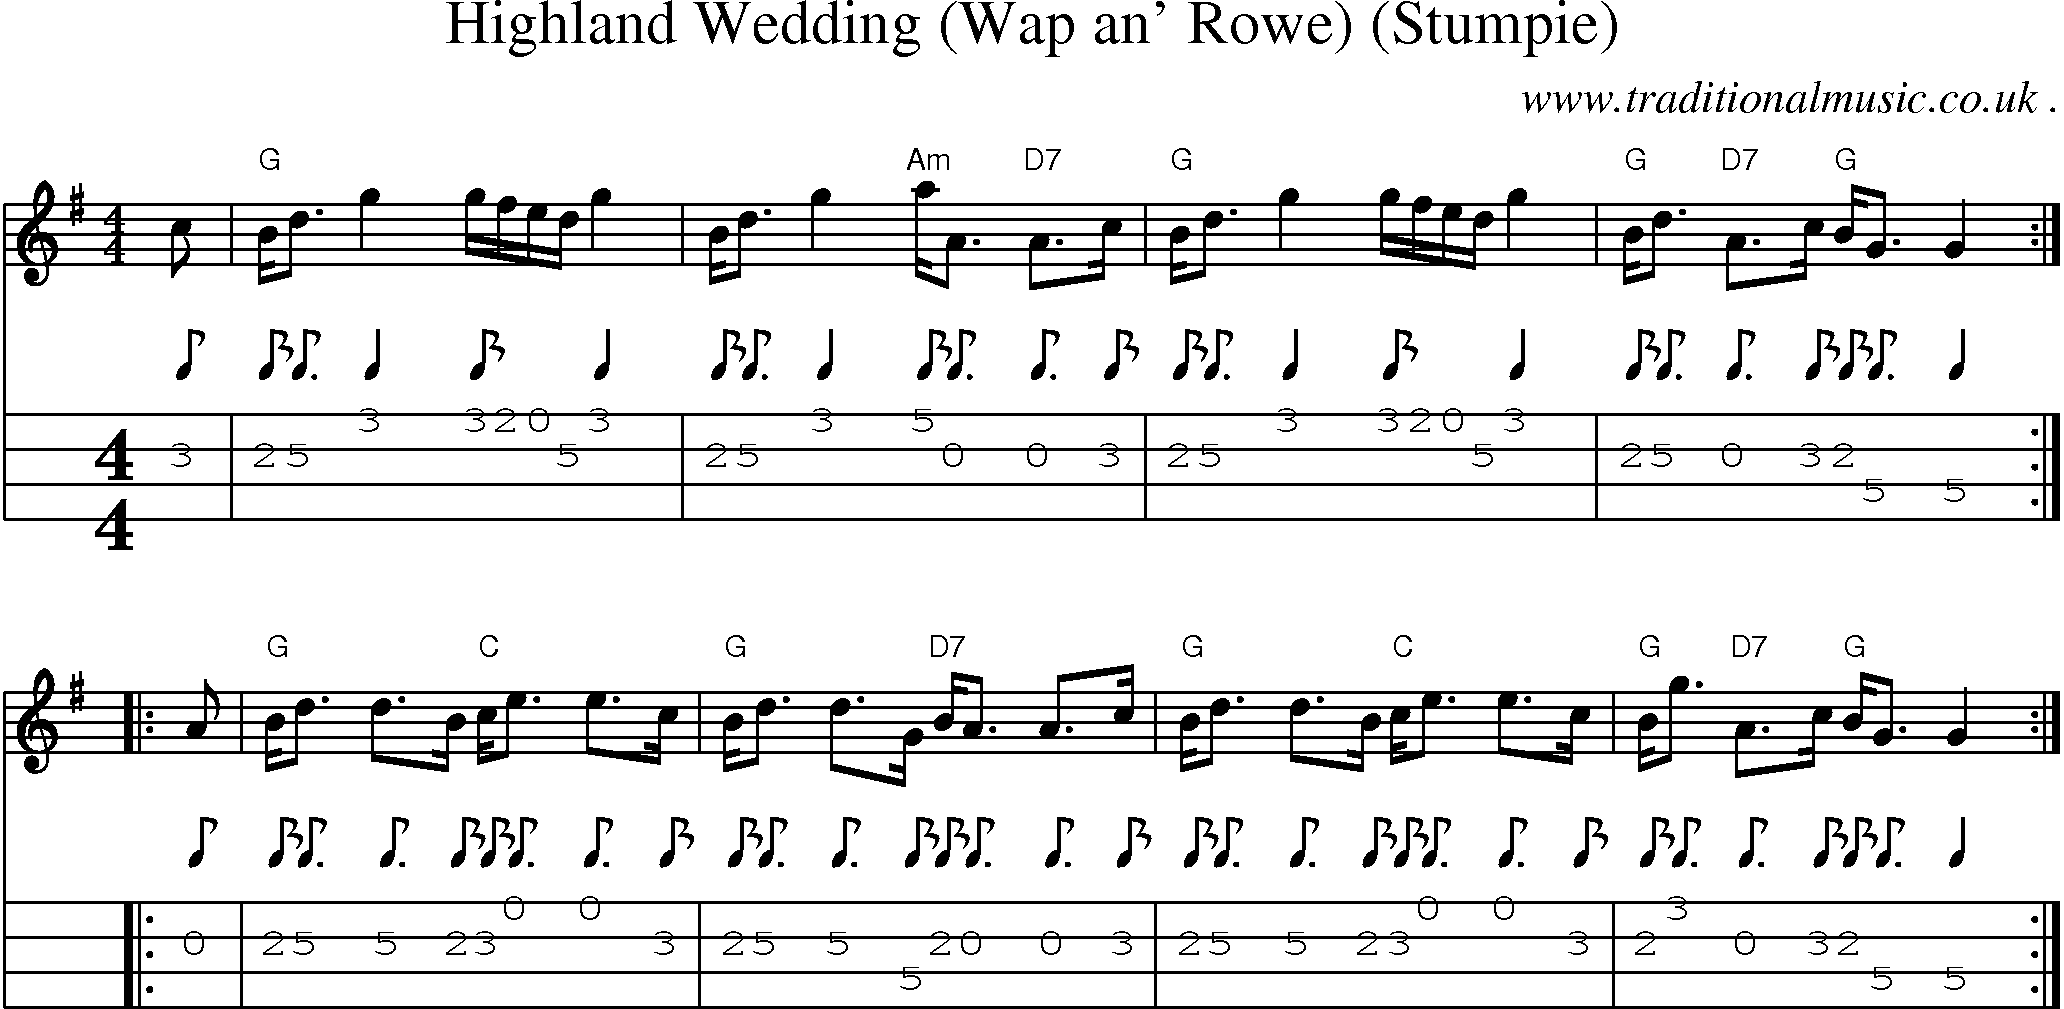 Sheet-music  score, Chords and Mandolin Tabs for Highland Wedding Wap An Rowe Stumpie